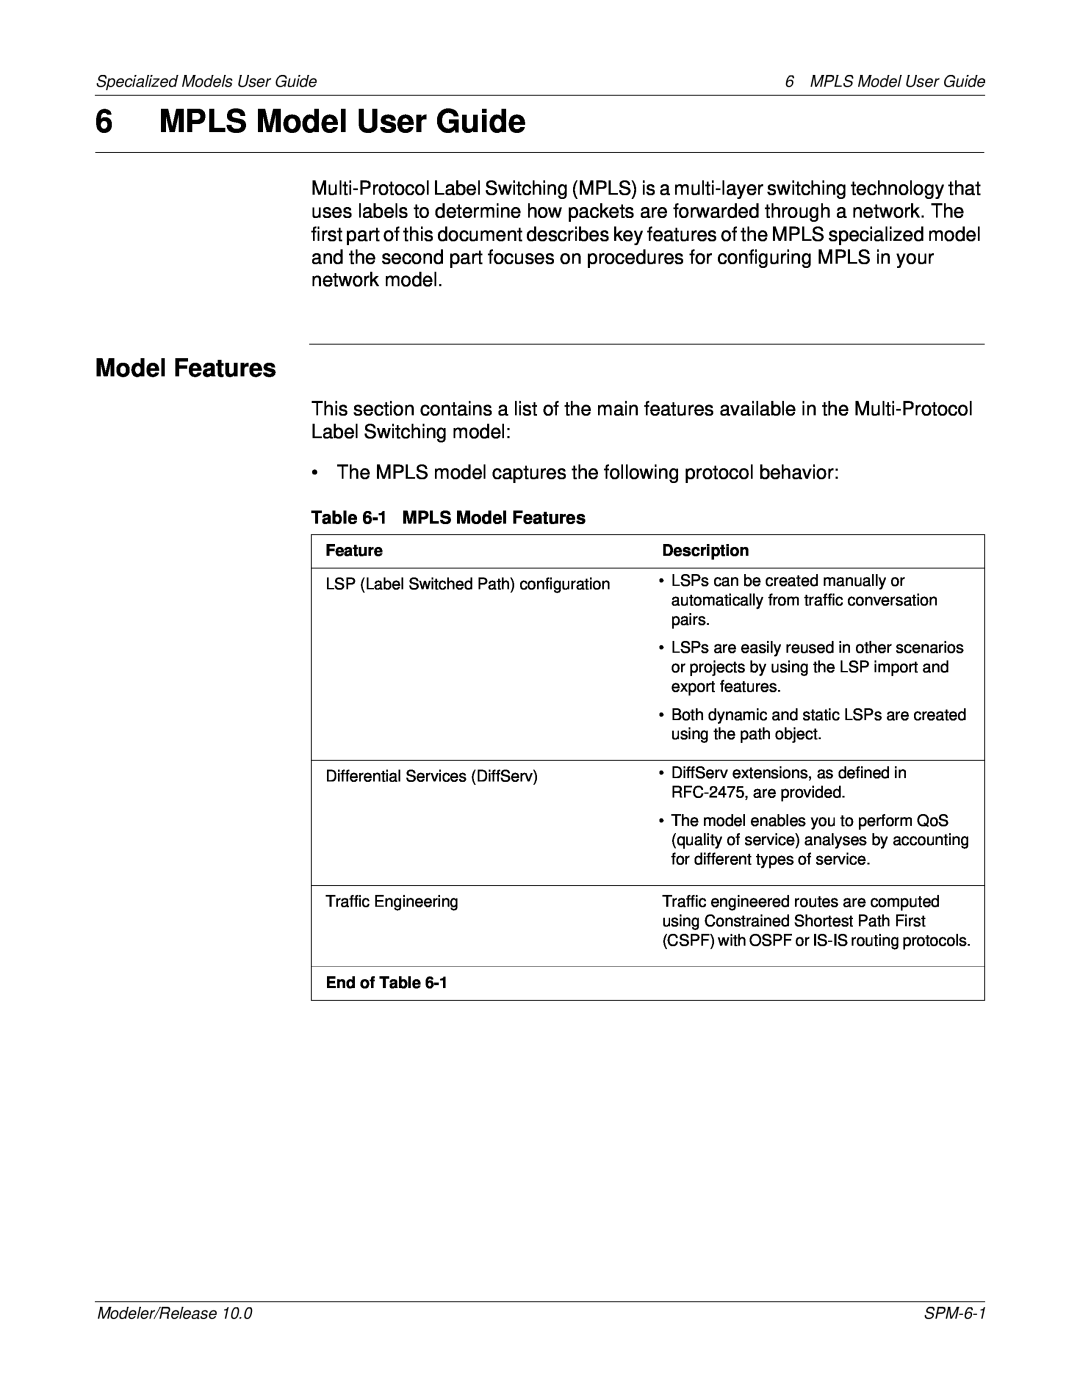 IBM 6 MPLS manual Model Features, MPLS Model User Guide 